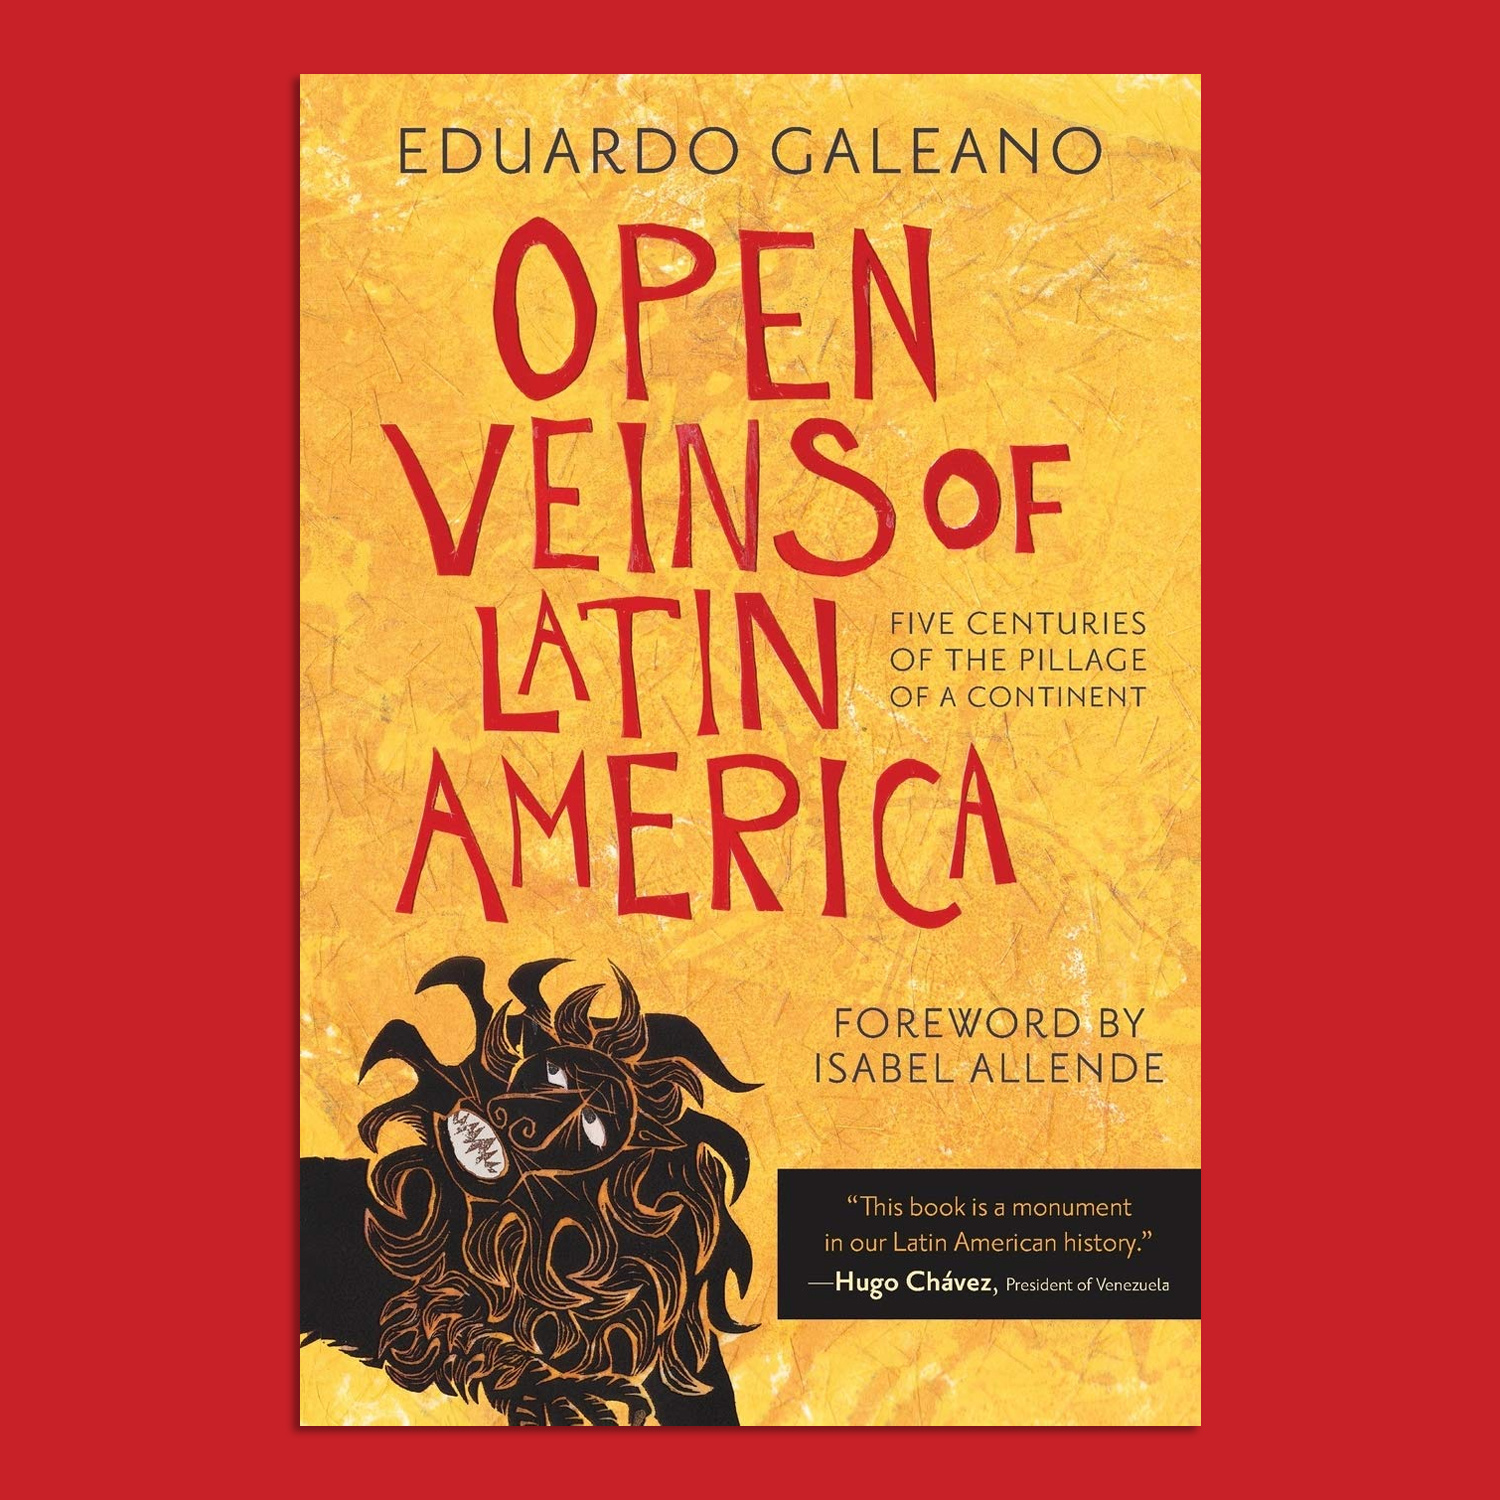 open the veins of latin america